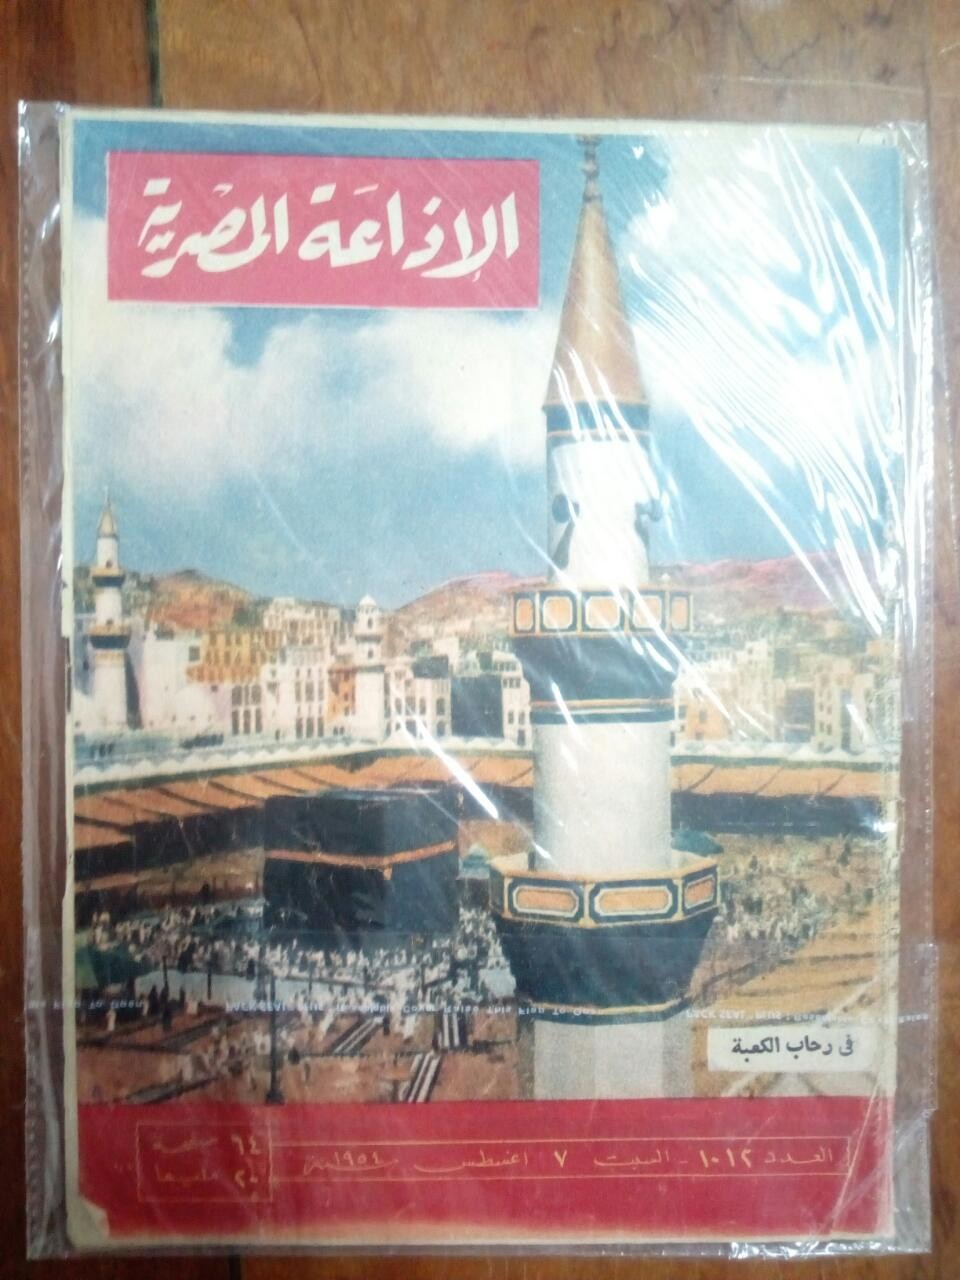 Egyptian Radio - In the Kaaba